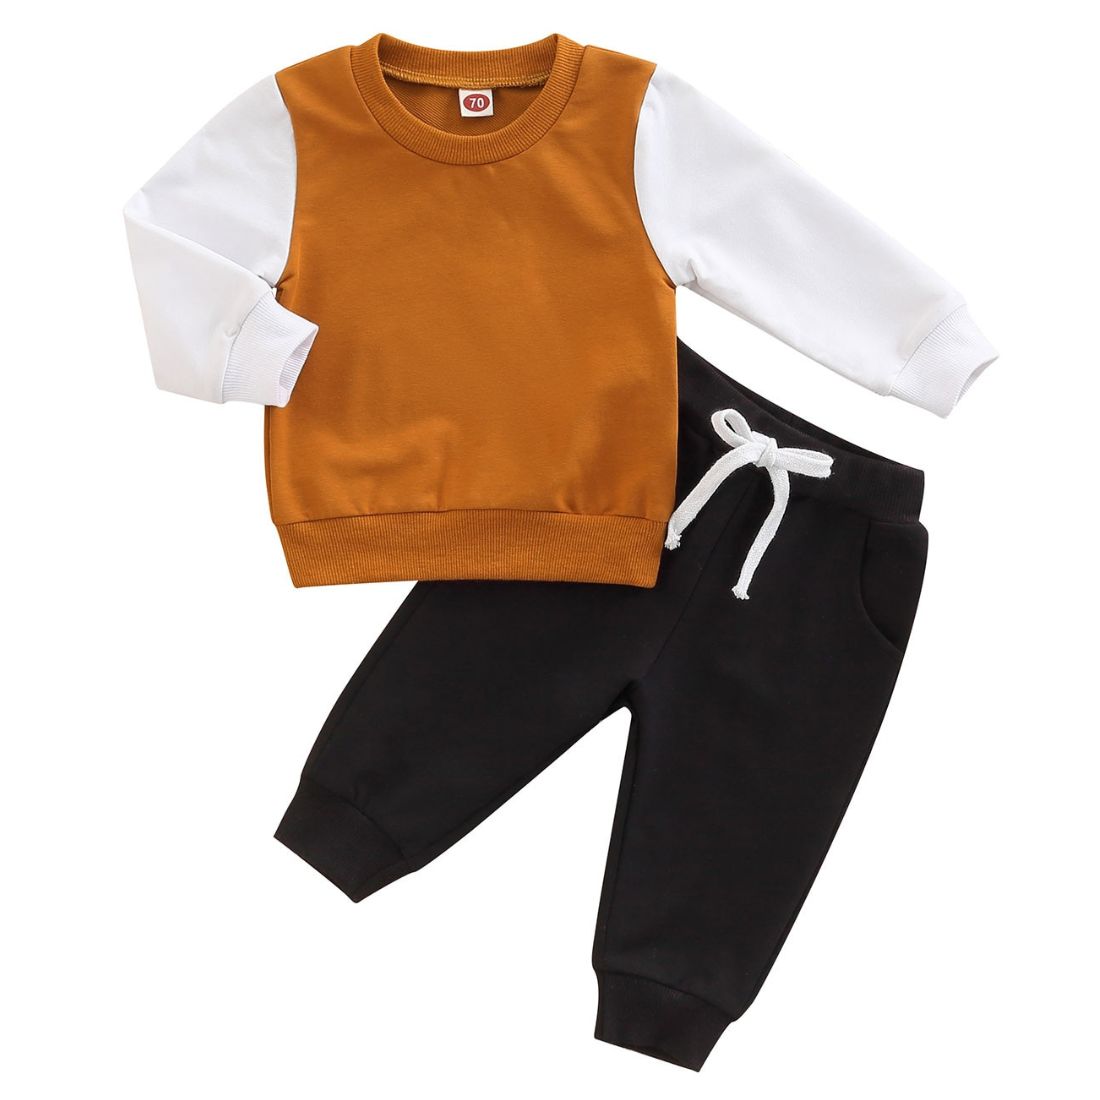 Collegiate Sweaty Baby Boy Clothing Set